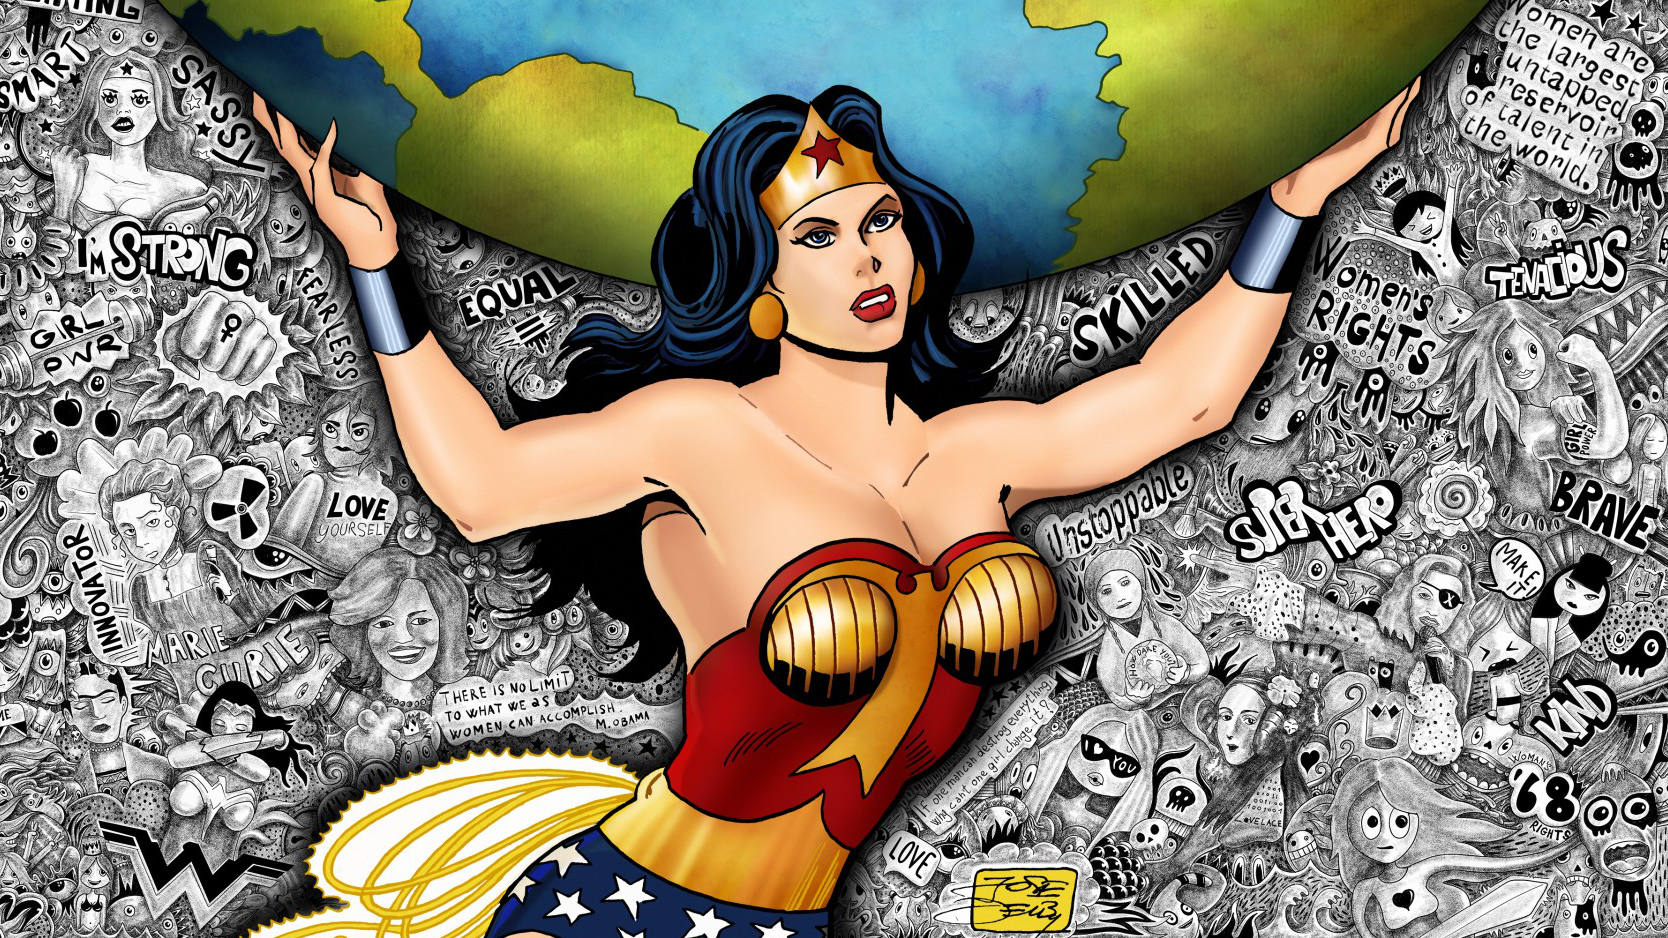 Wonder Woman NFT "Weight of the World" by José Delbo. Image: José Delbo